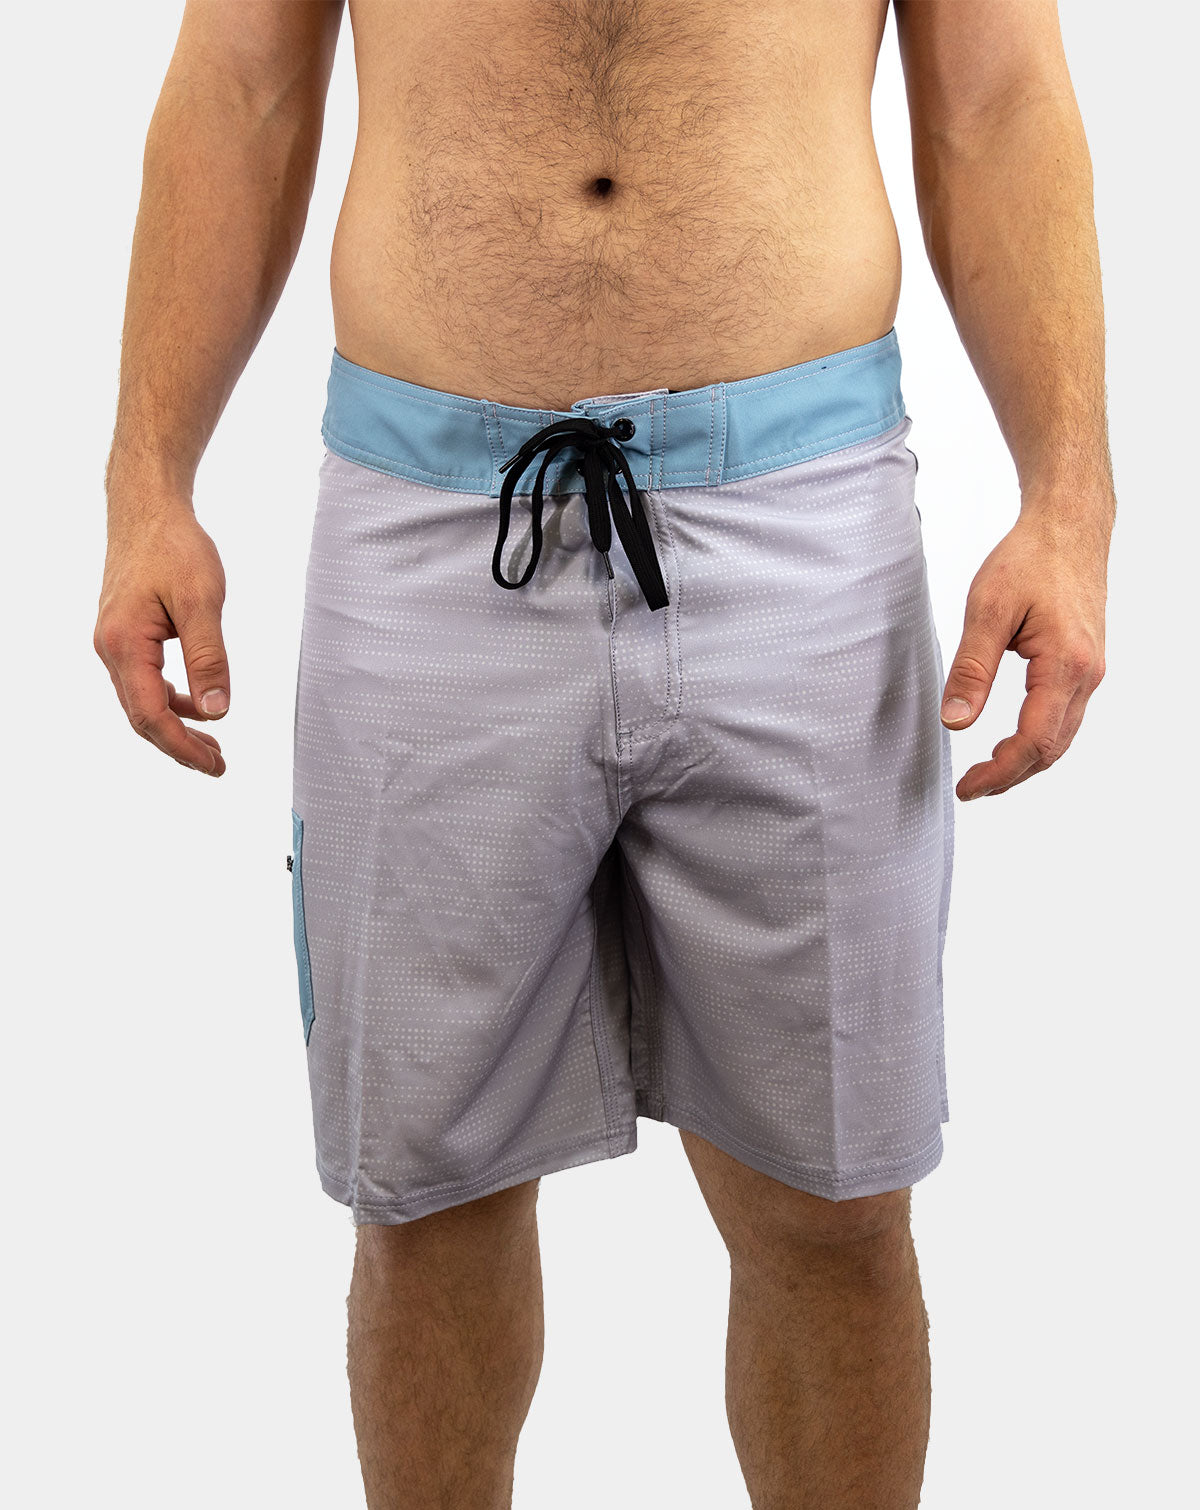 Men's Must-Have Fishing Clothing - Reel Sportswear